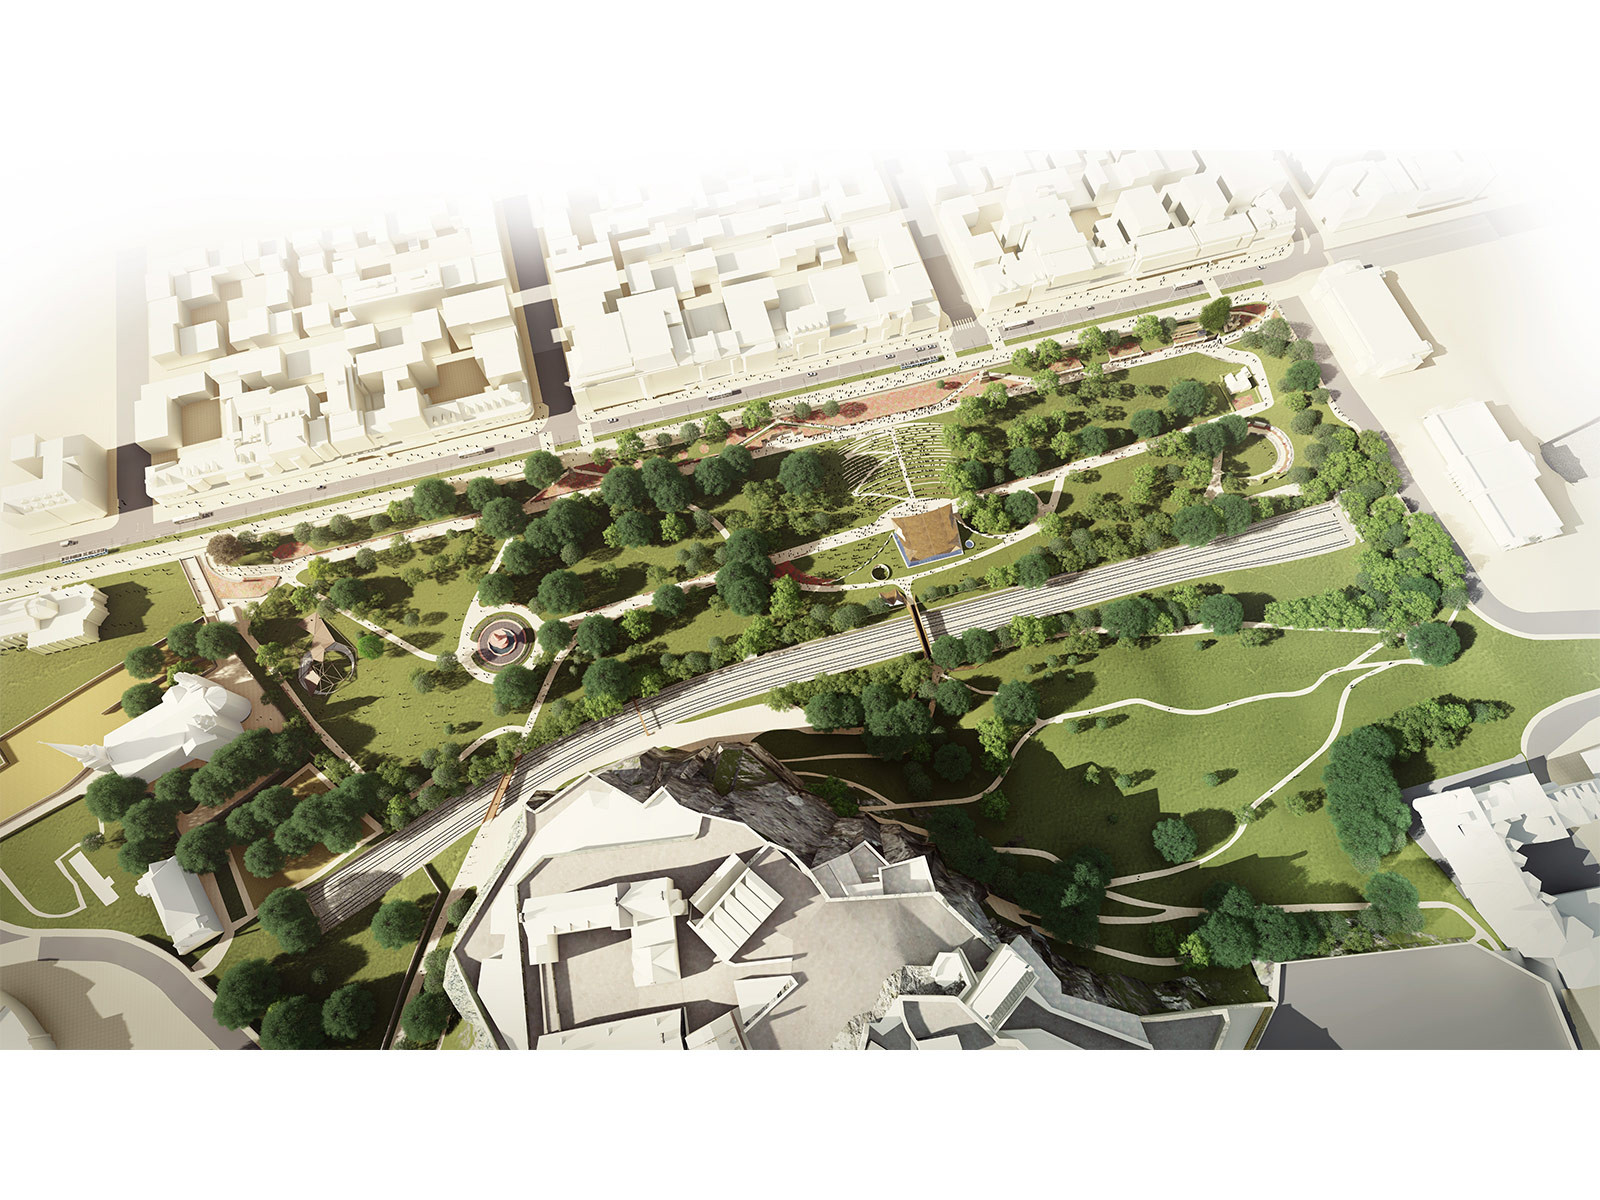 Best ideas about Park West Landscape
. Save or Pin Ross Pavilion design concepts by David Adjaye BIG and Now.